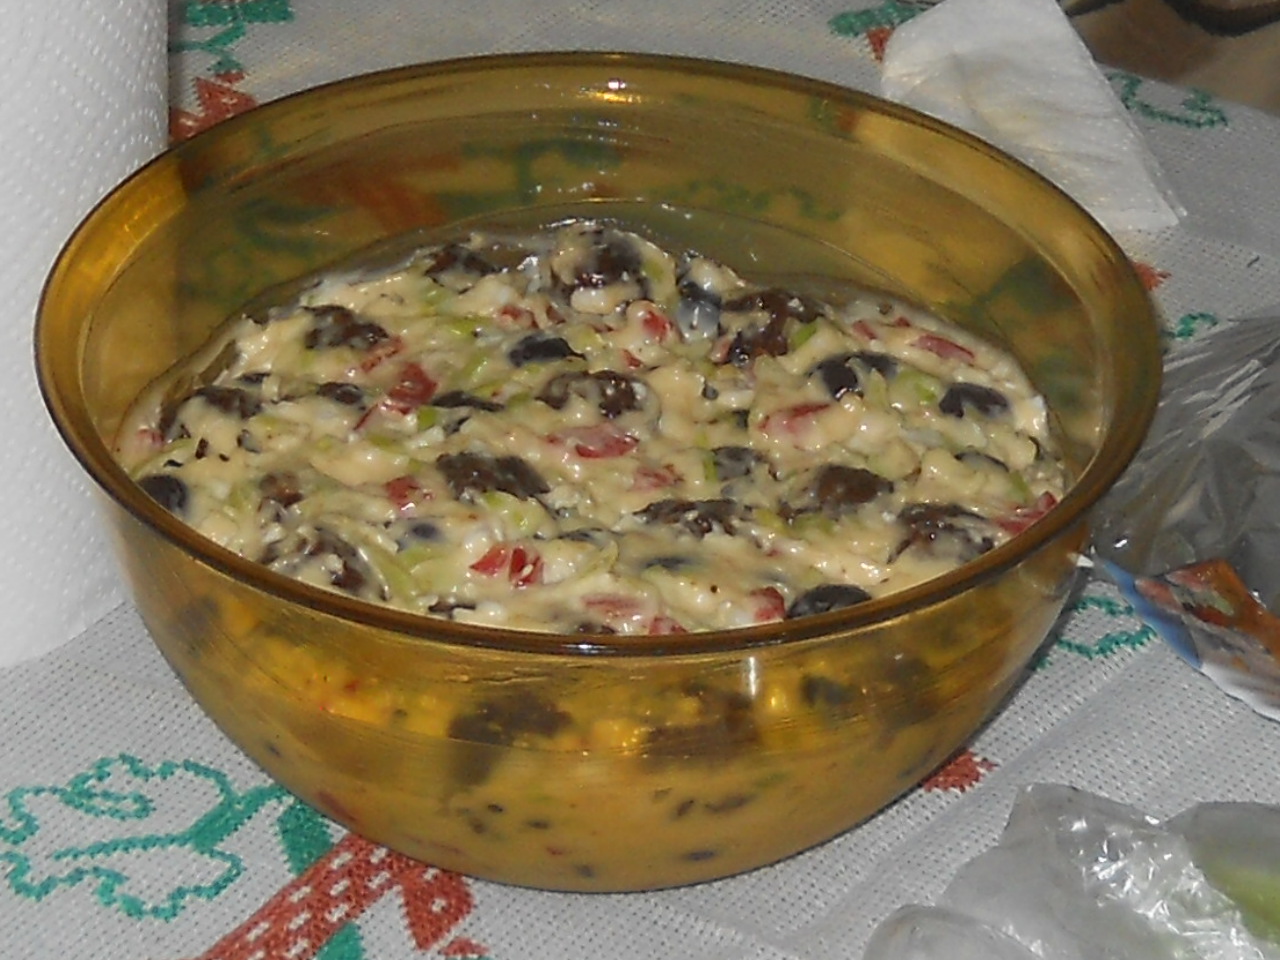 Salata Berlineza